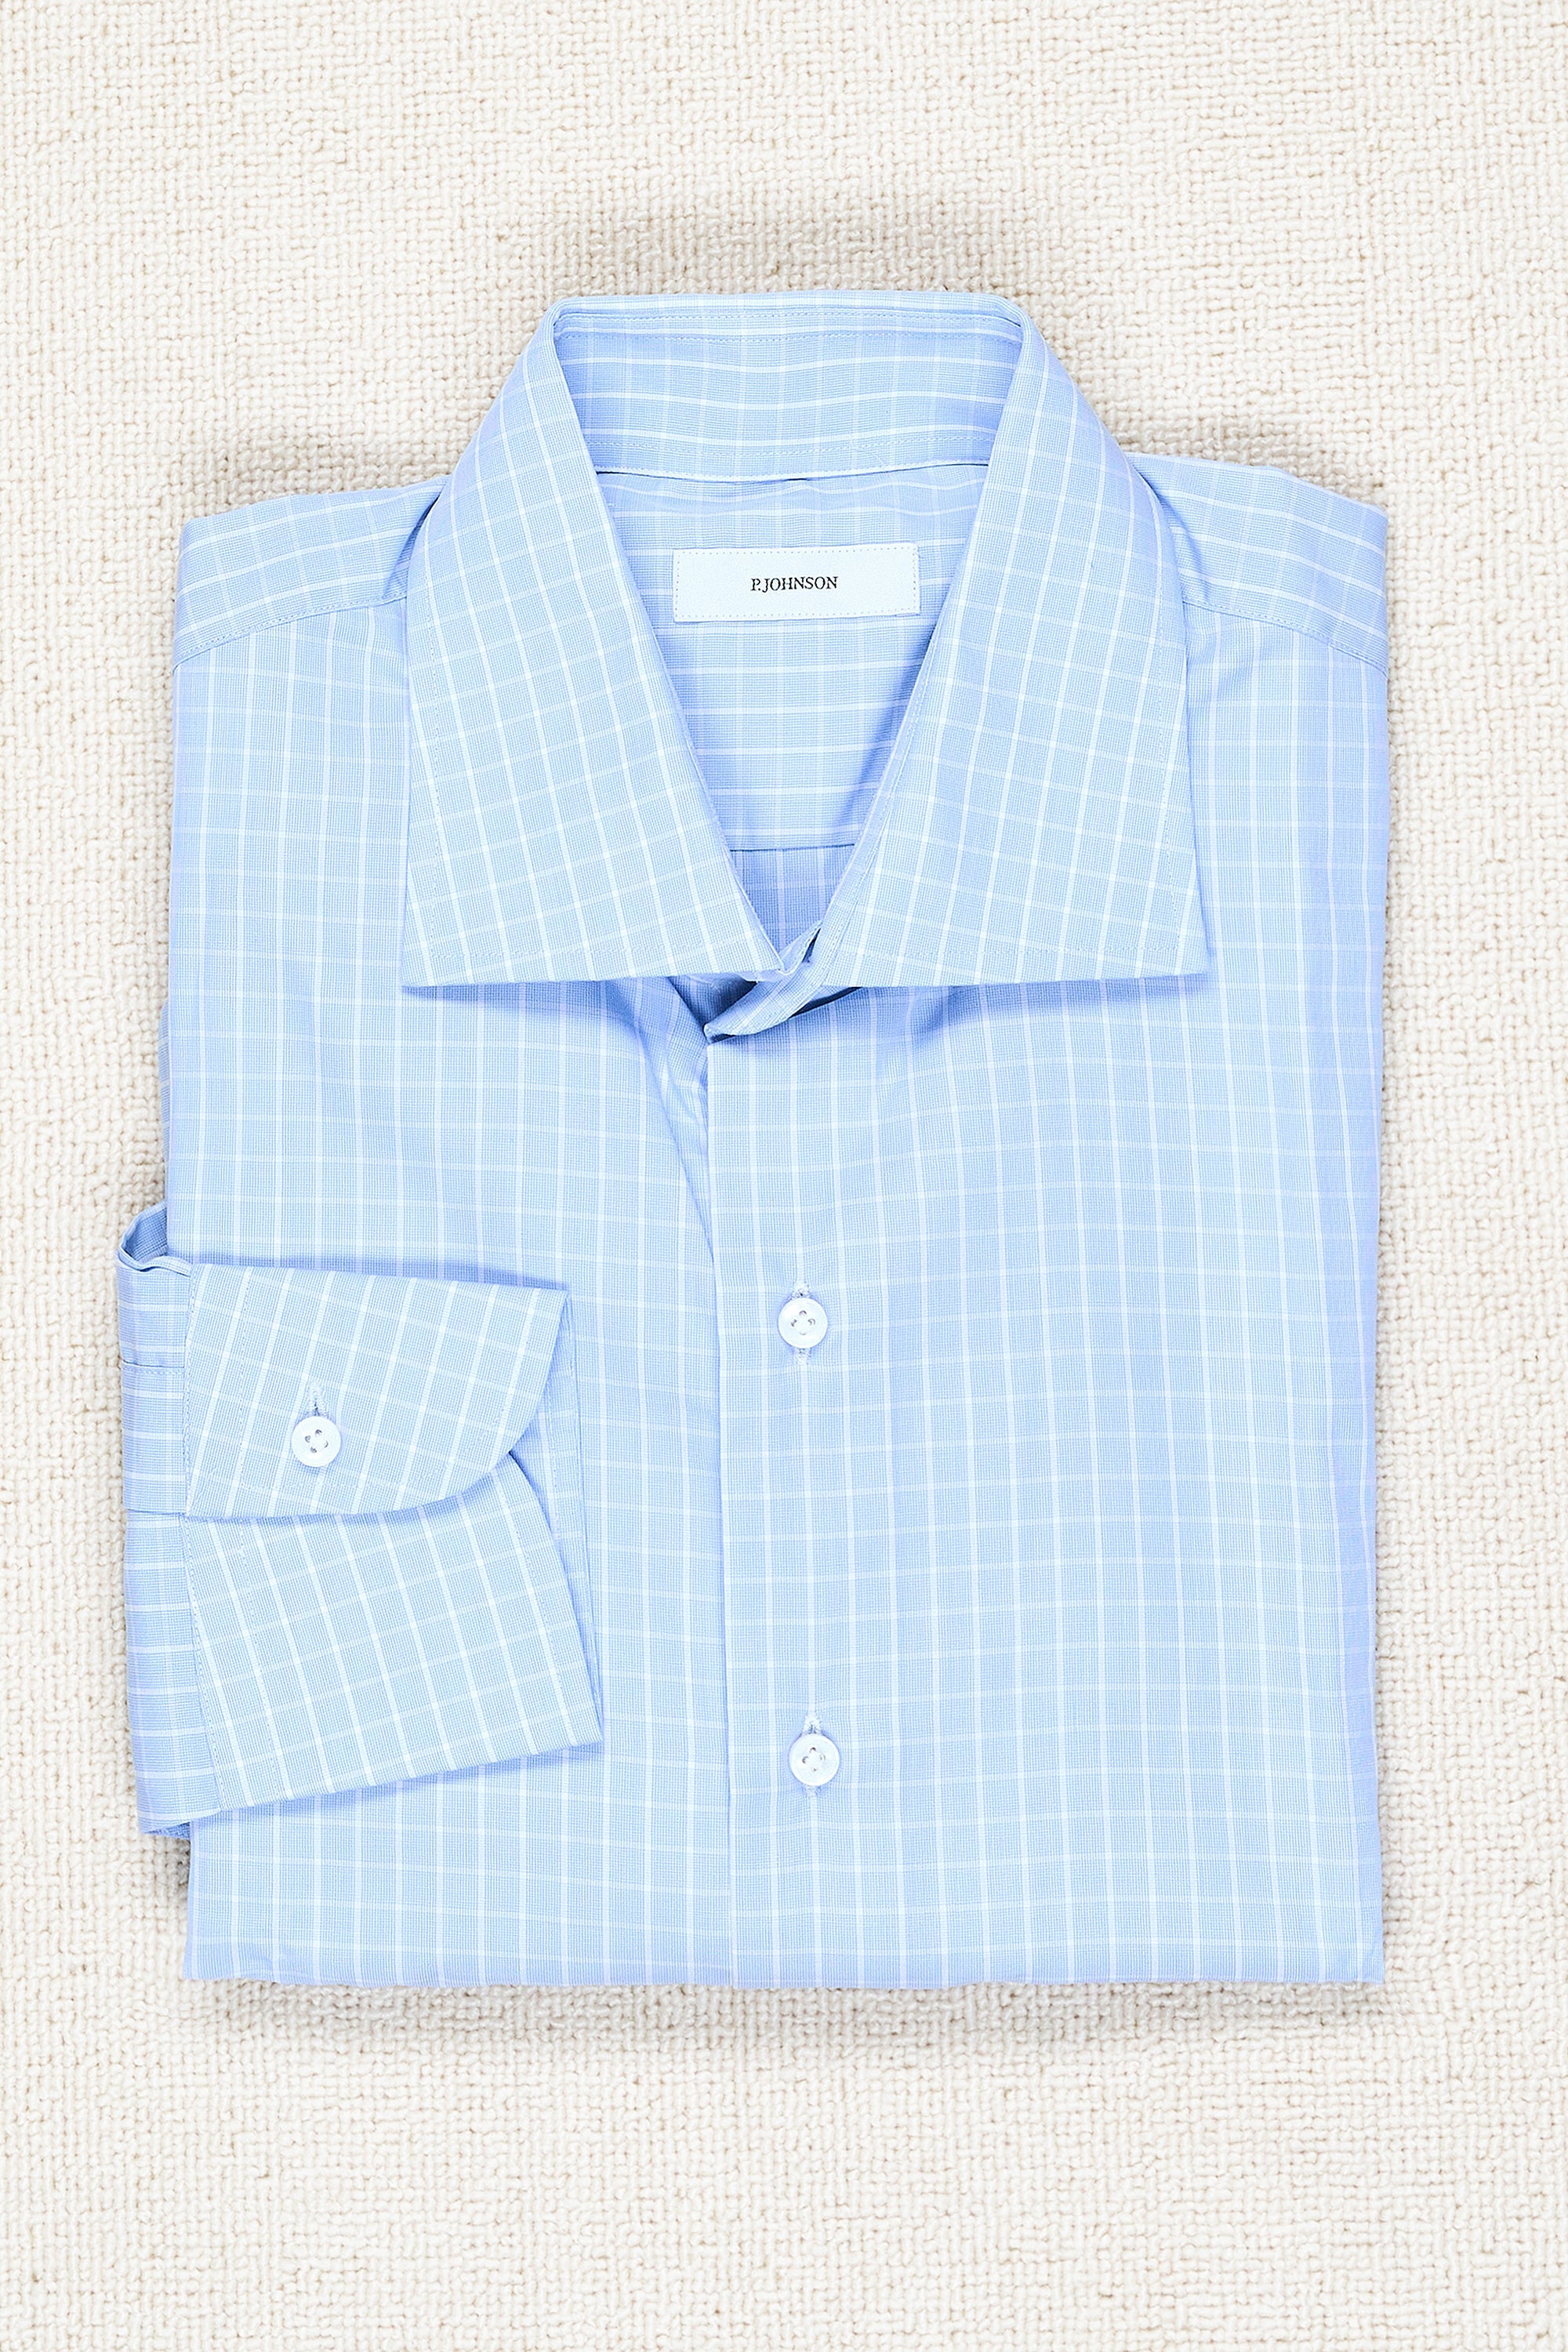 P. Johnson Blue/White Check Cotton Spread Collar Shirt